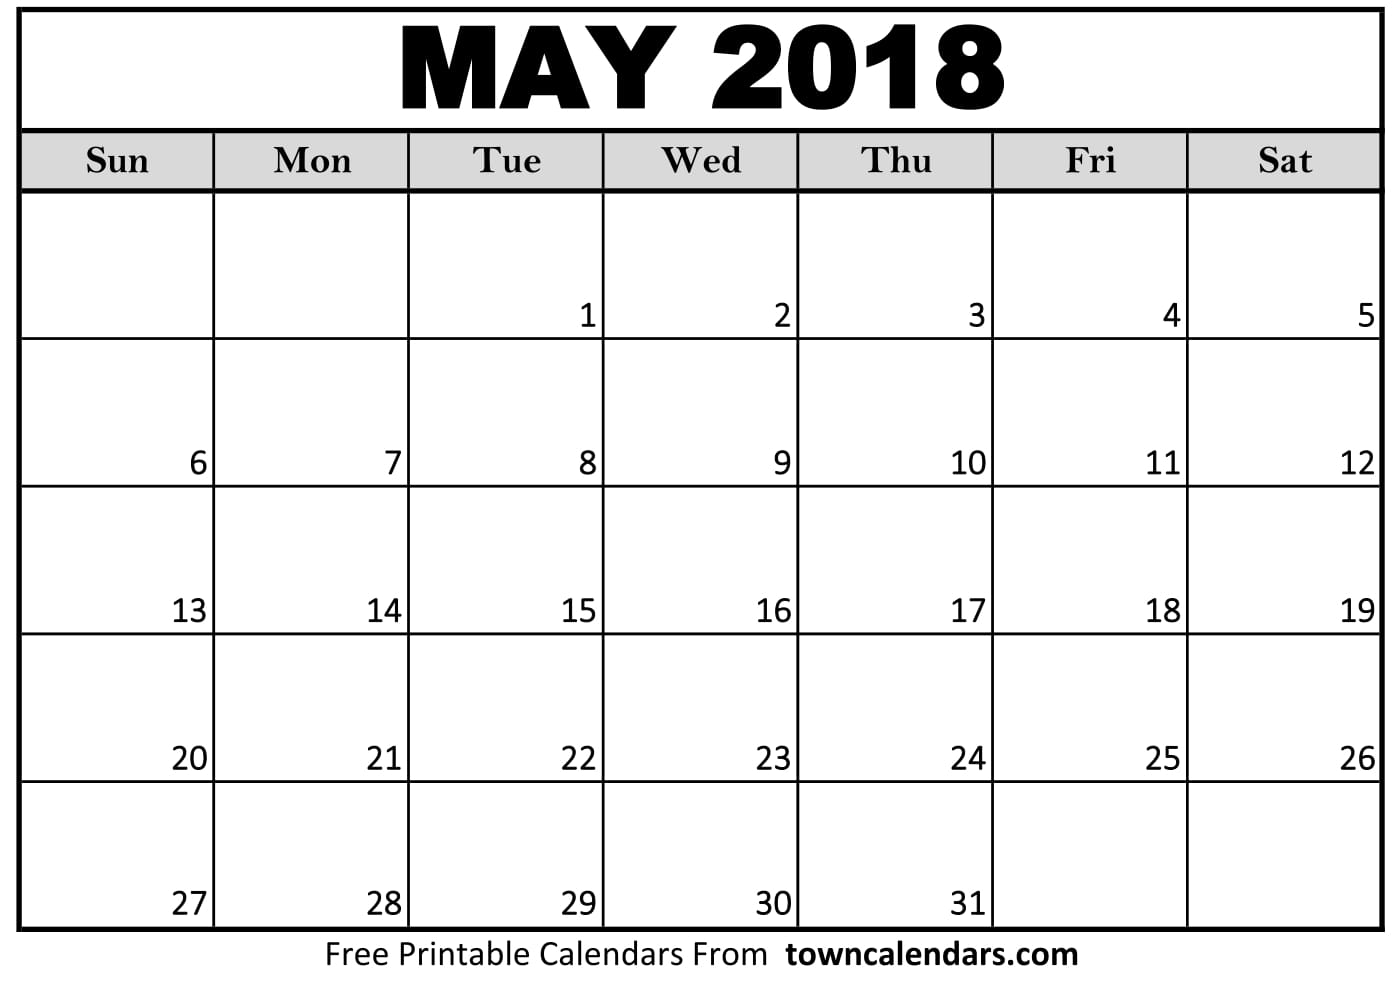 Printable May 2018 Calendar towncalendars com